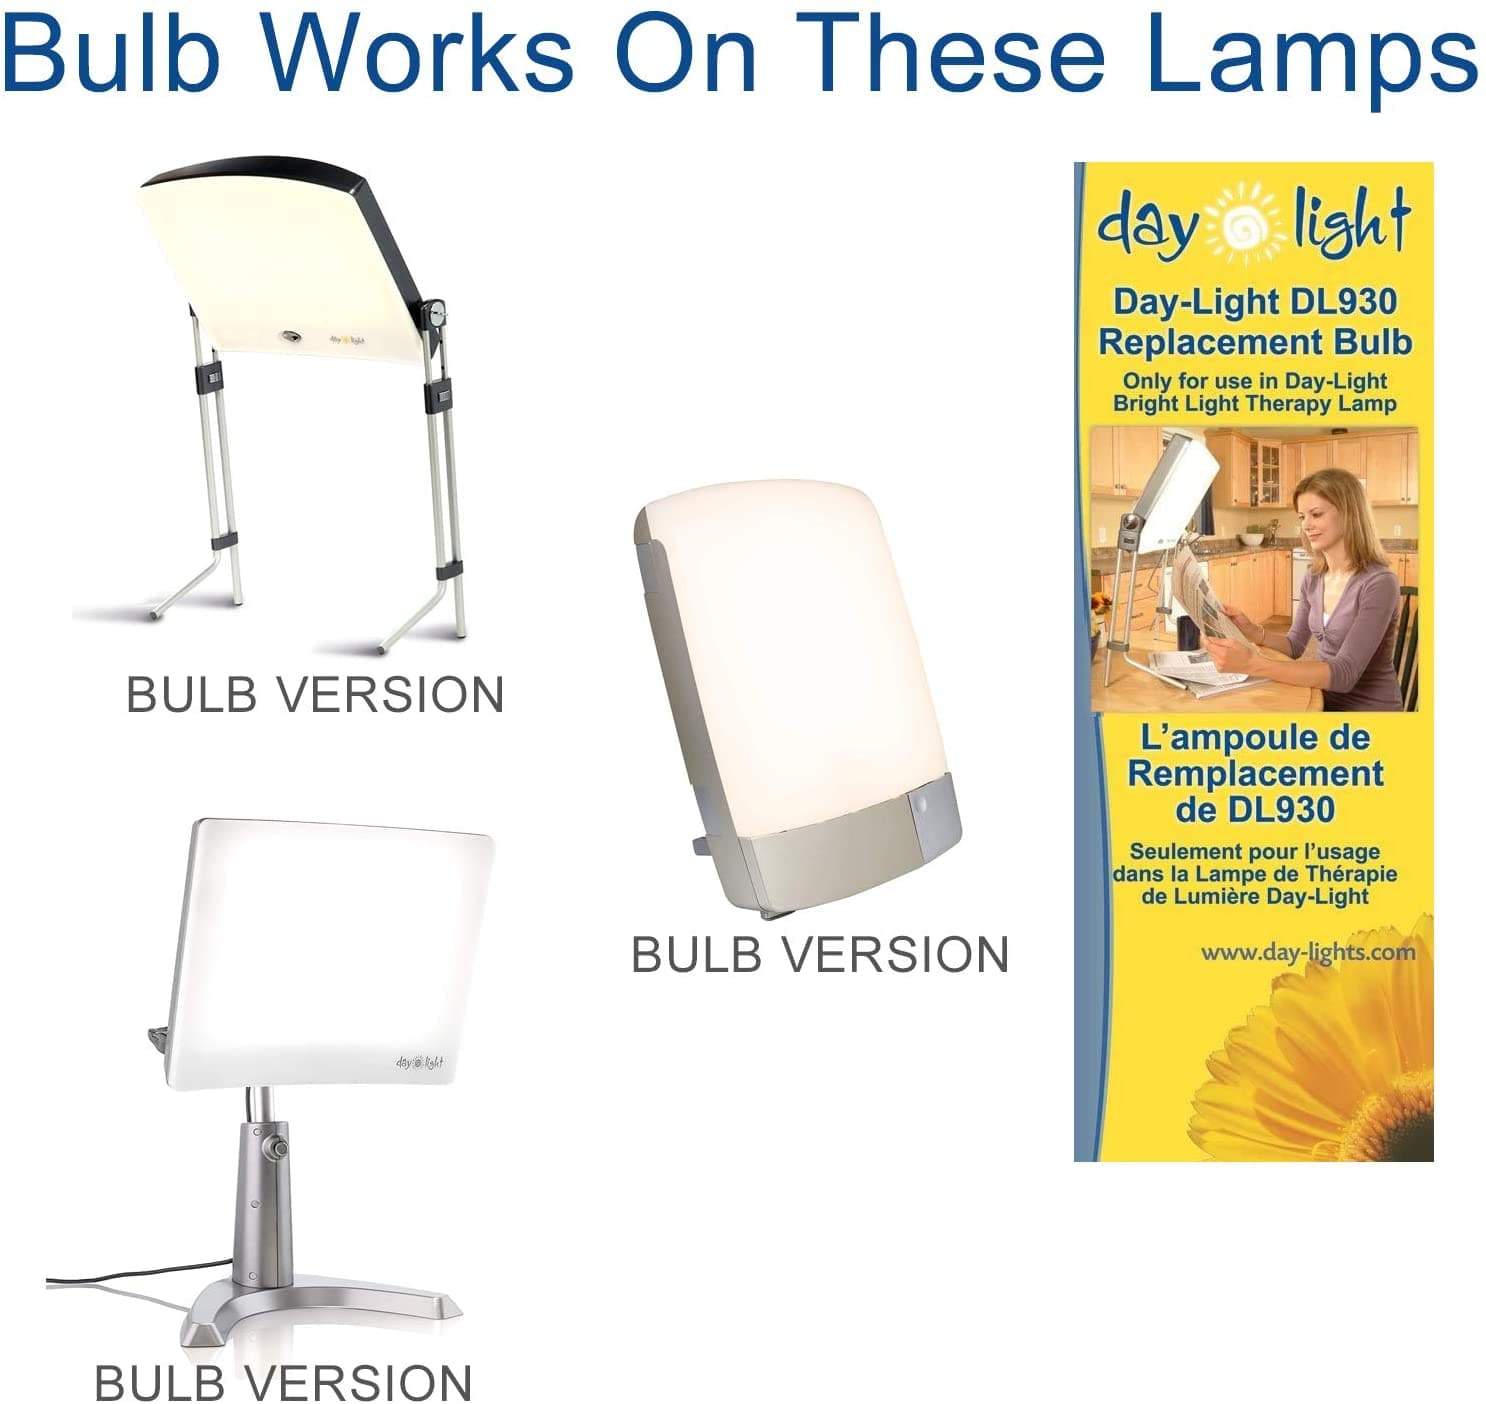 Carex Day-Light Classic Plus Bright LED Light Therapy Lamp - Open Box - Senior.com Mood Lights